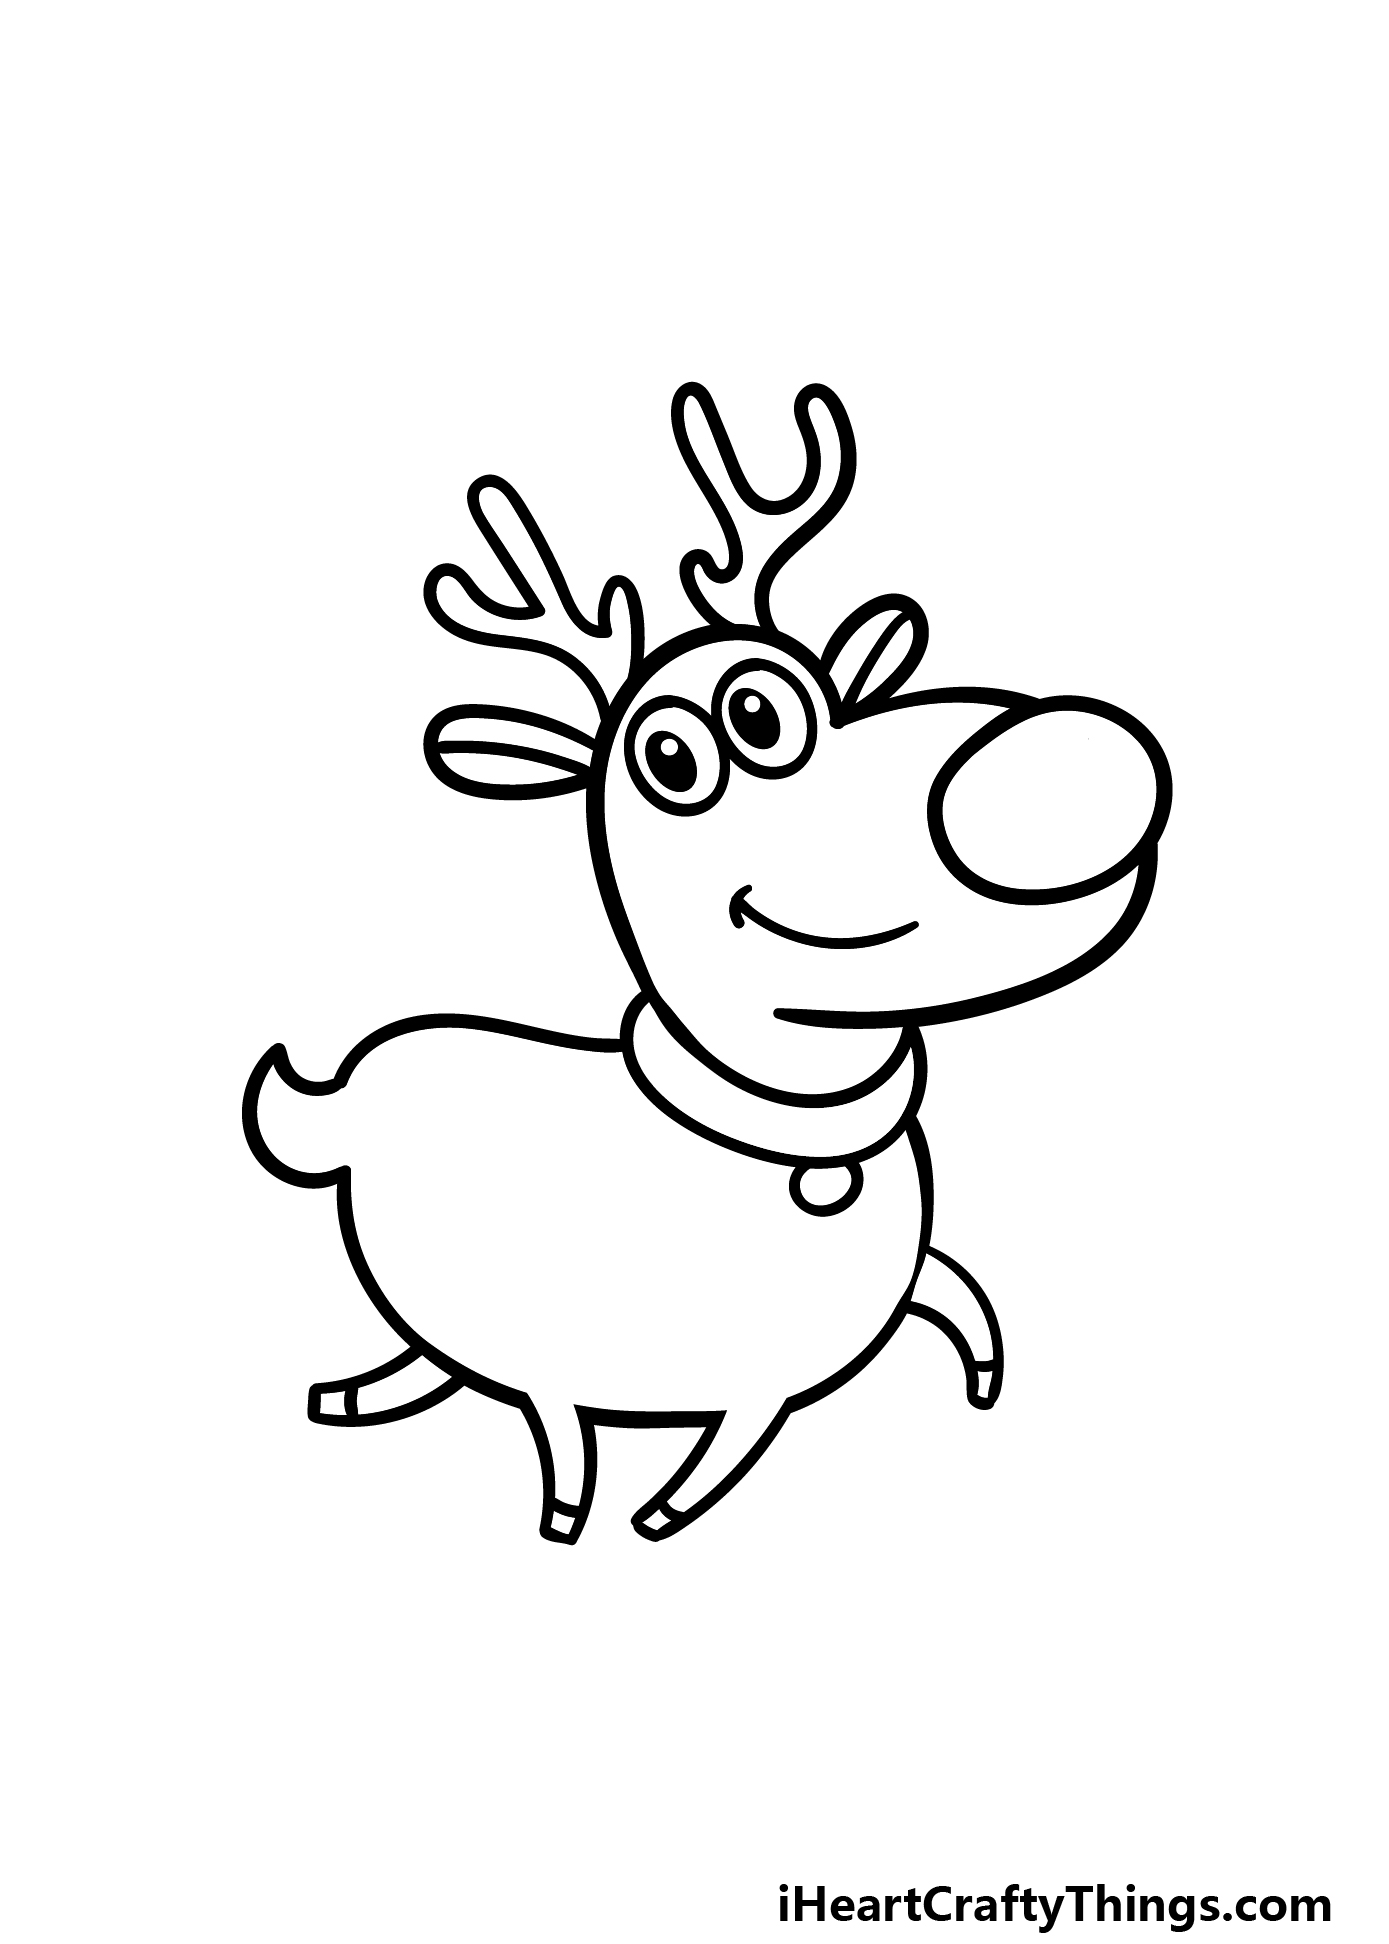 Cartoon Reindeer Drawing - How To Draw A Cartoon Reindeer Step By Step